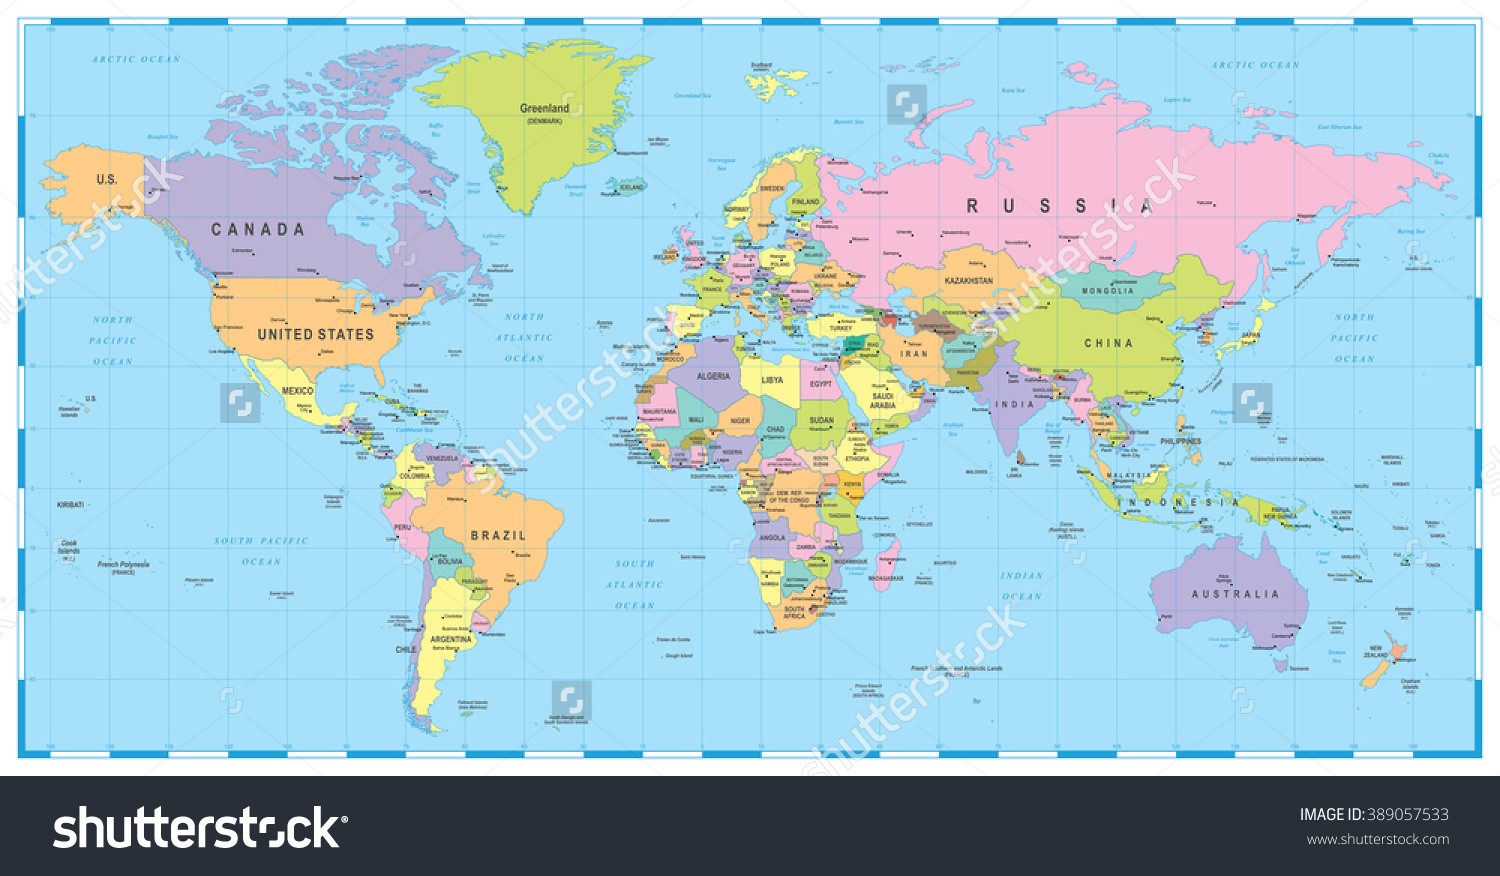 World Map Hd pluspng.com Fres